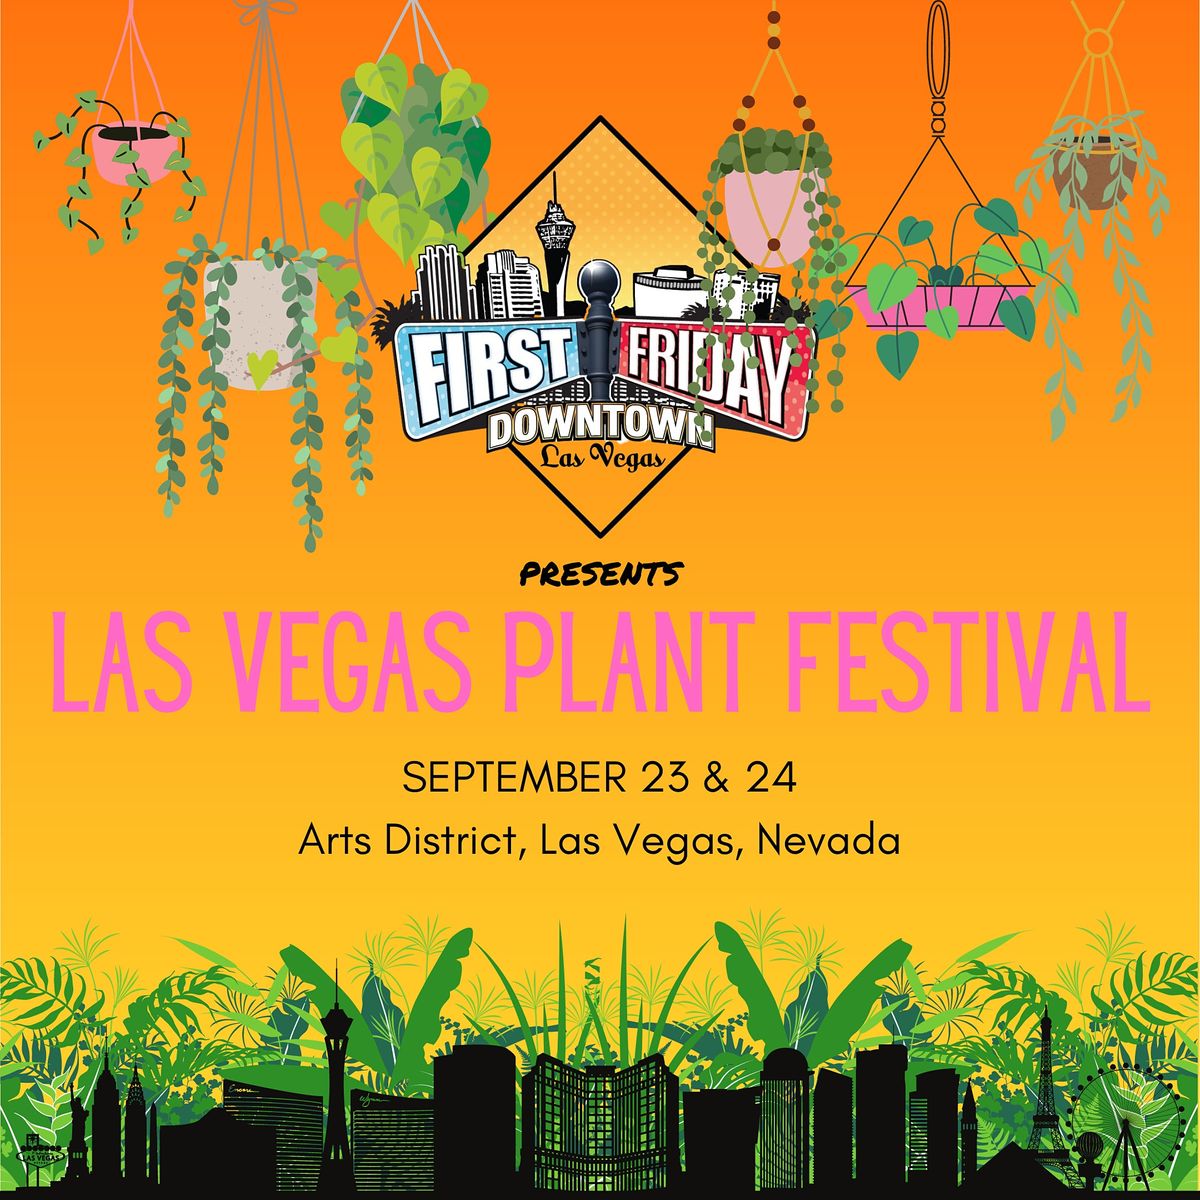 2022 Las Vegas Plant Festival